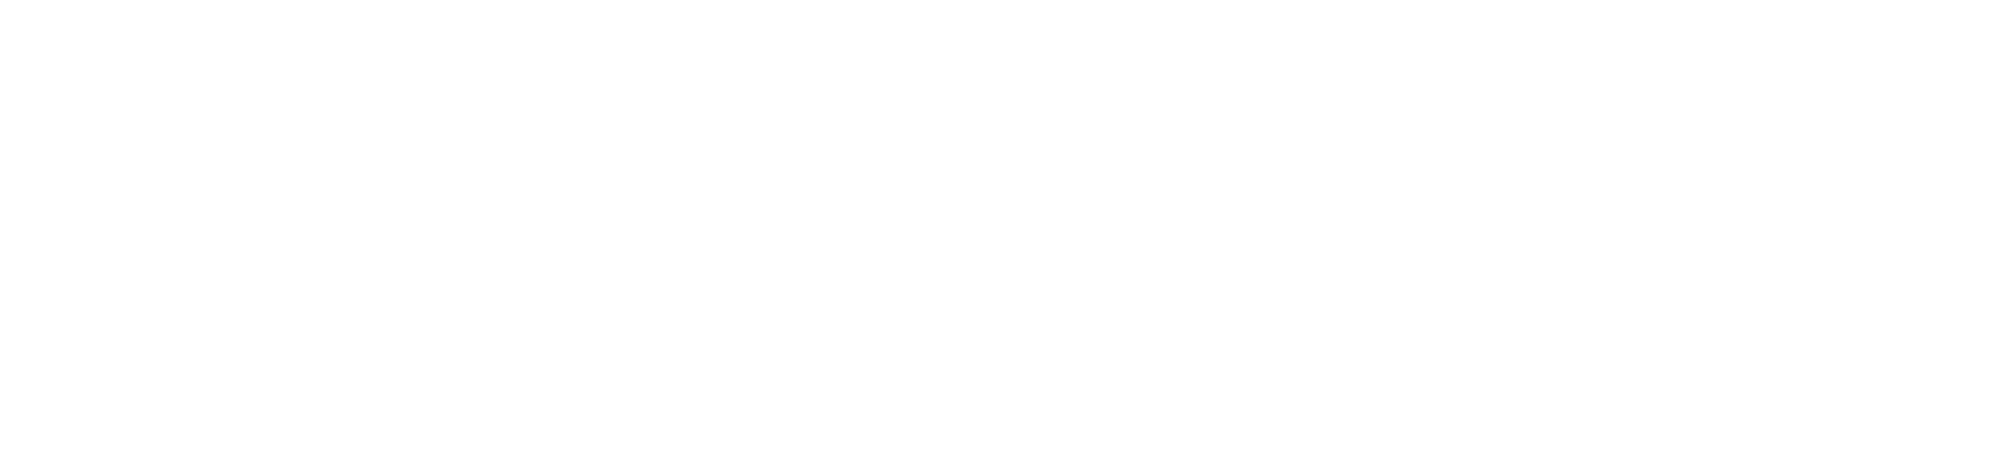 shadowsoft_logo_white_full